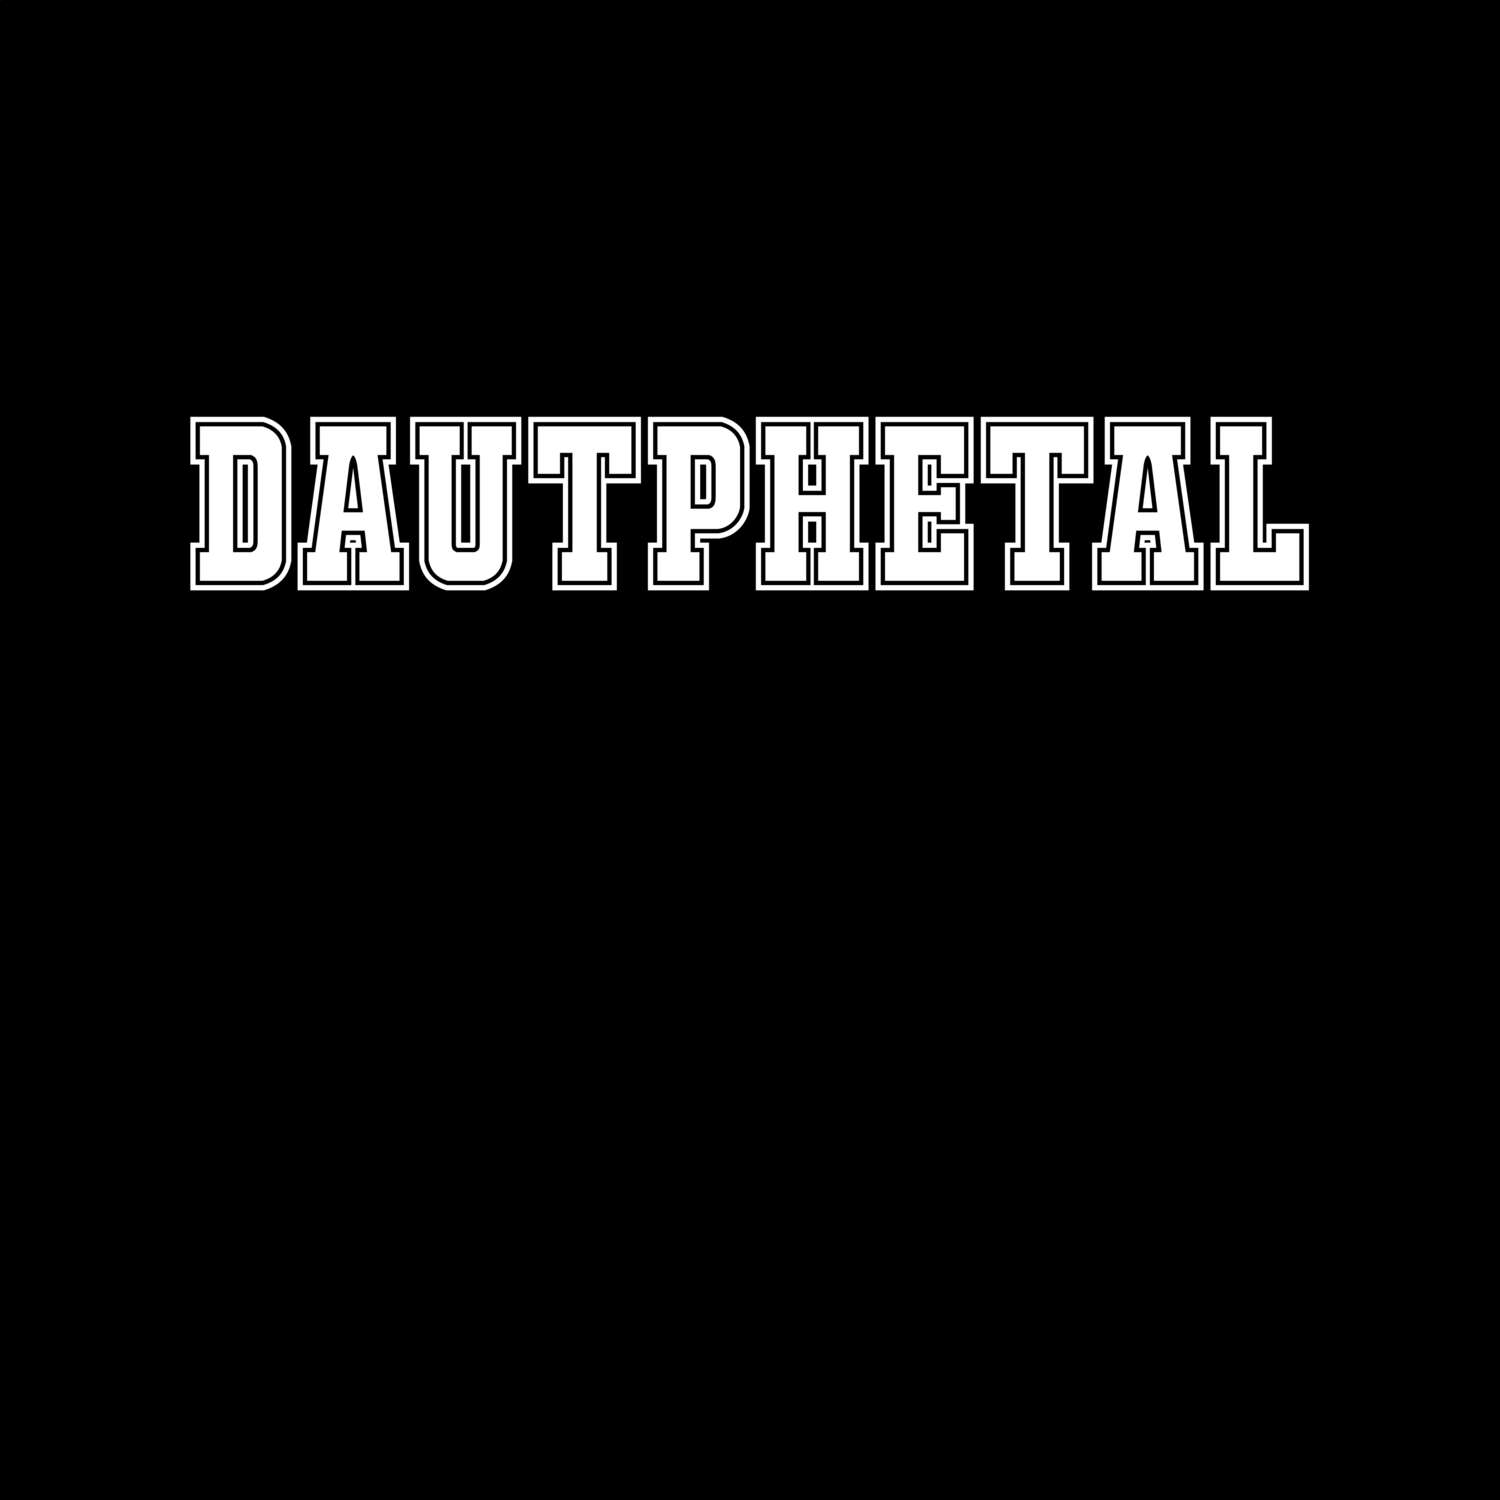 Dautphetal T-Shirt »Classic«